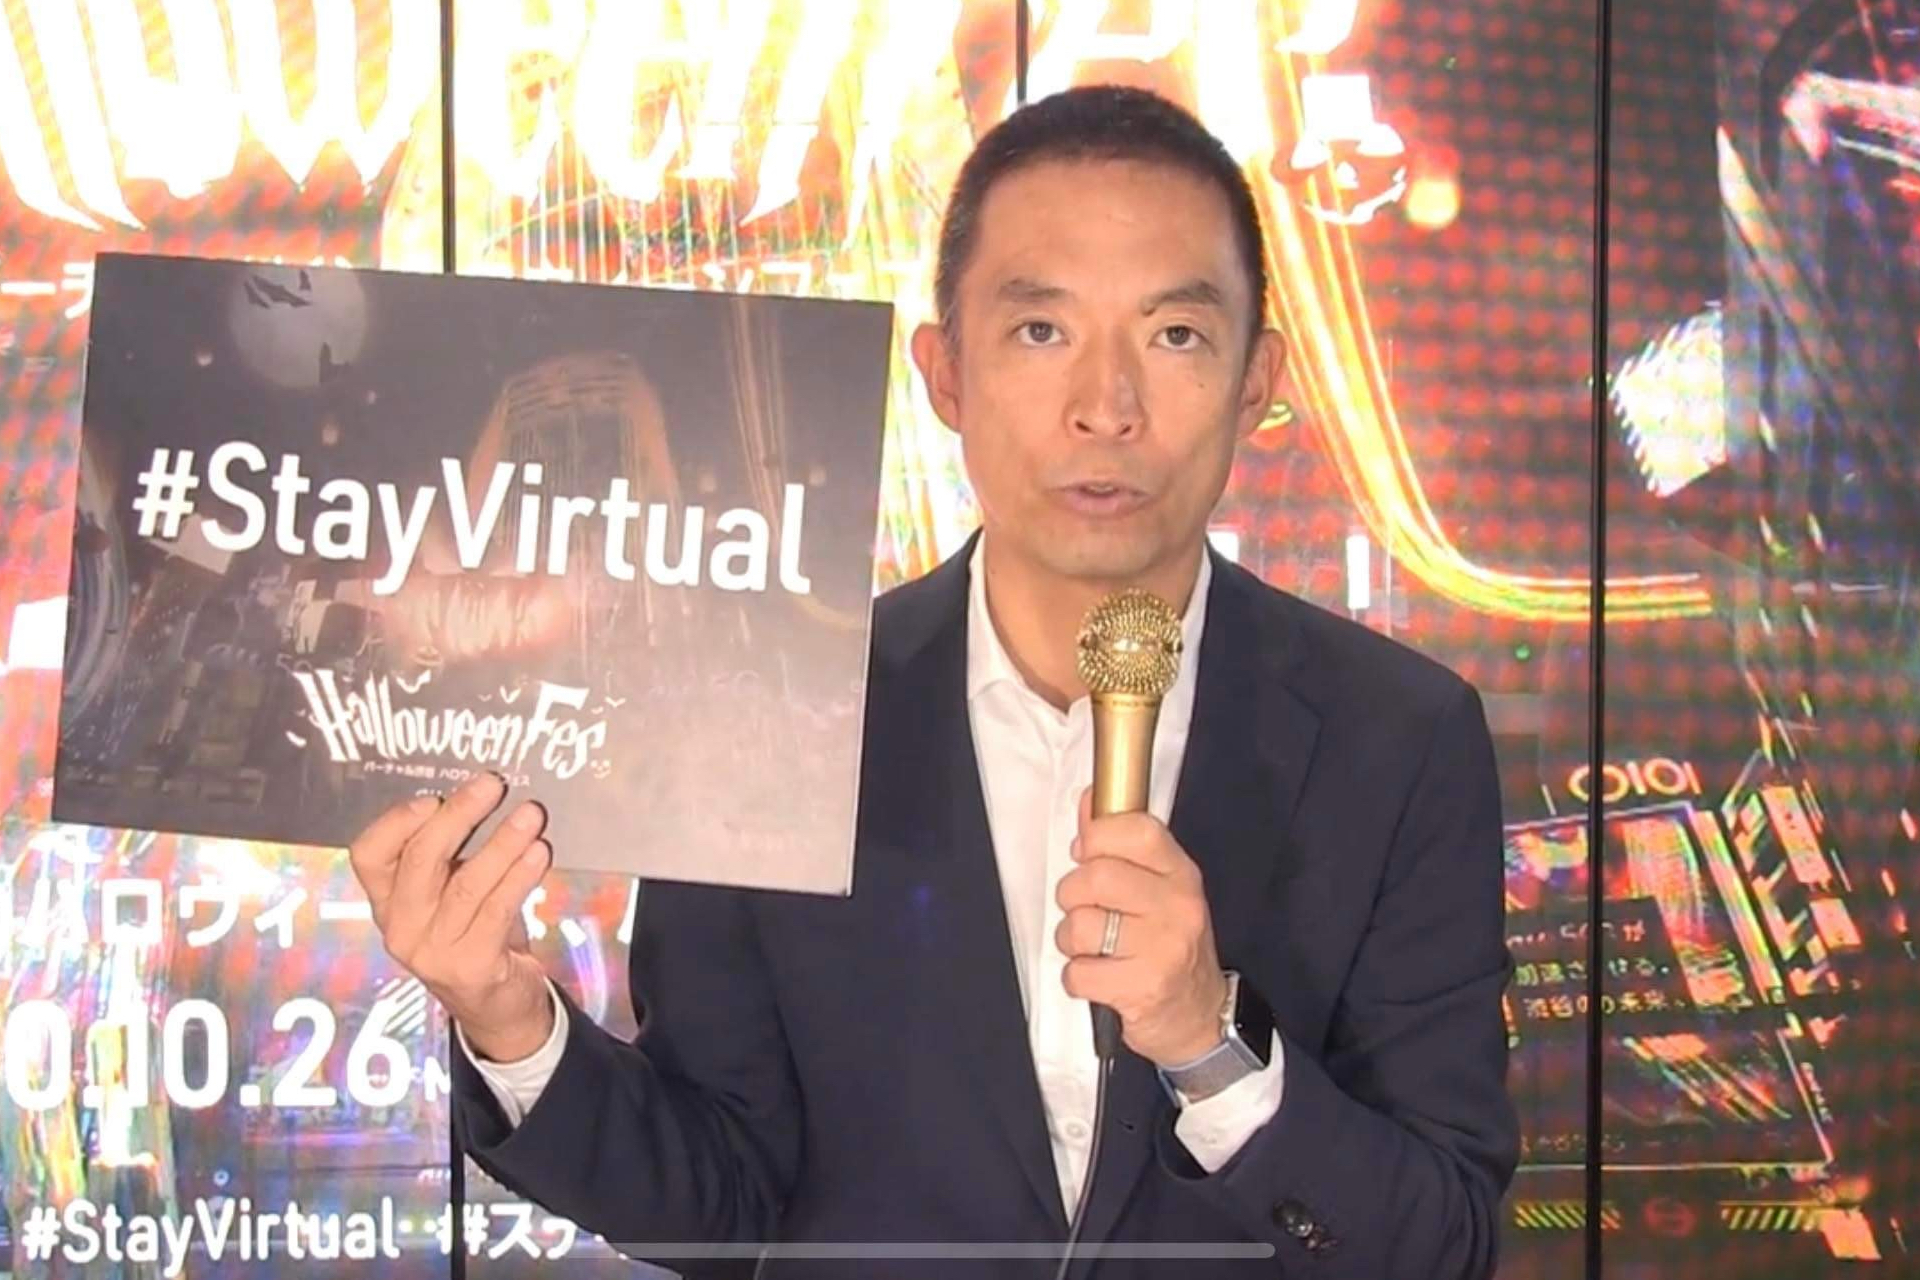 『＃StayVirtual』のパネルを手に、『バーチャル渋谷』について語る渋谷区・長谷部区長（画像は2020年のもの）